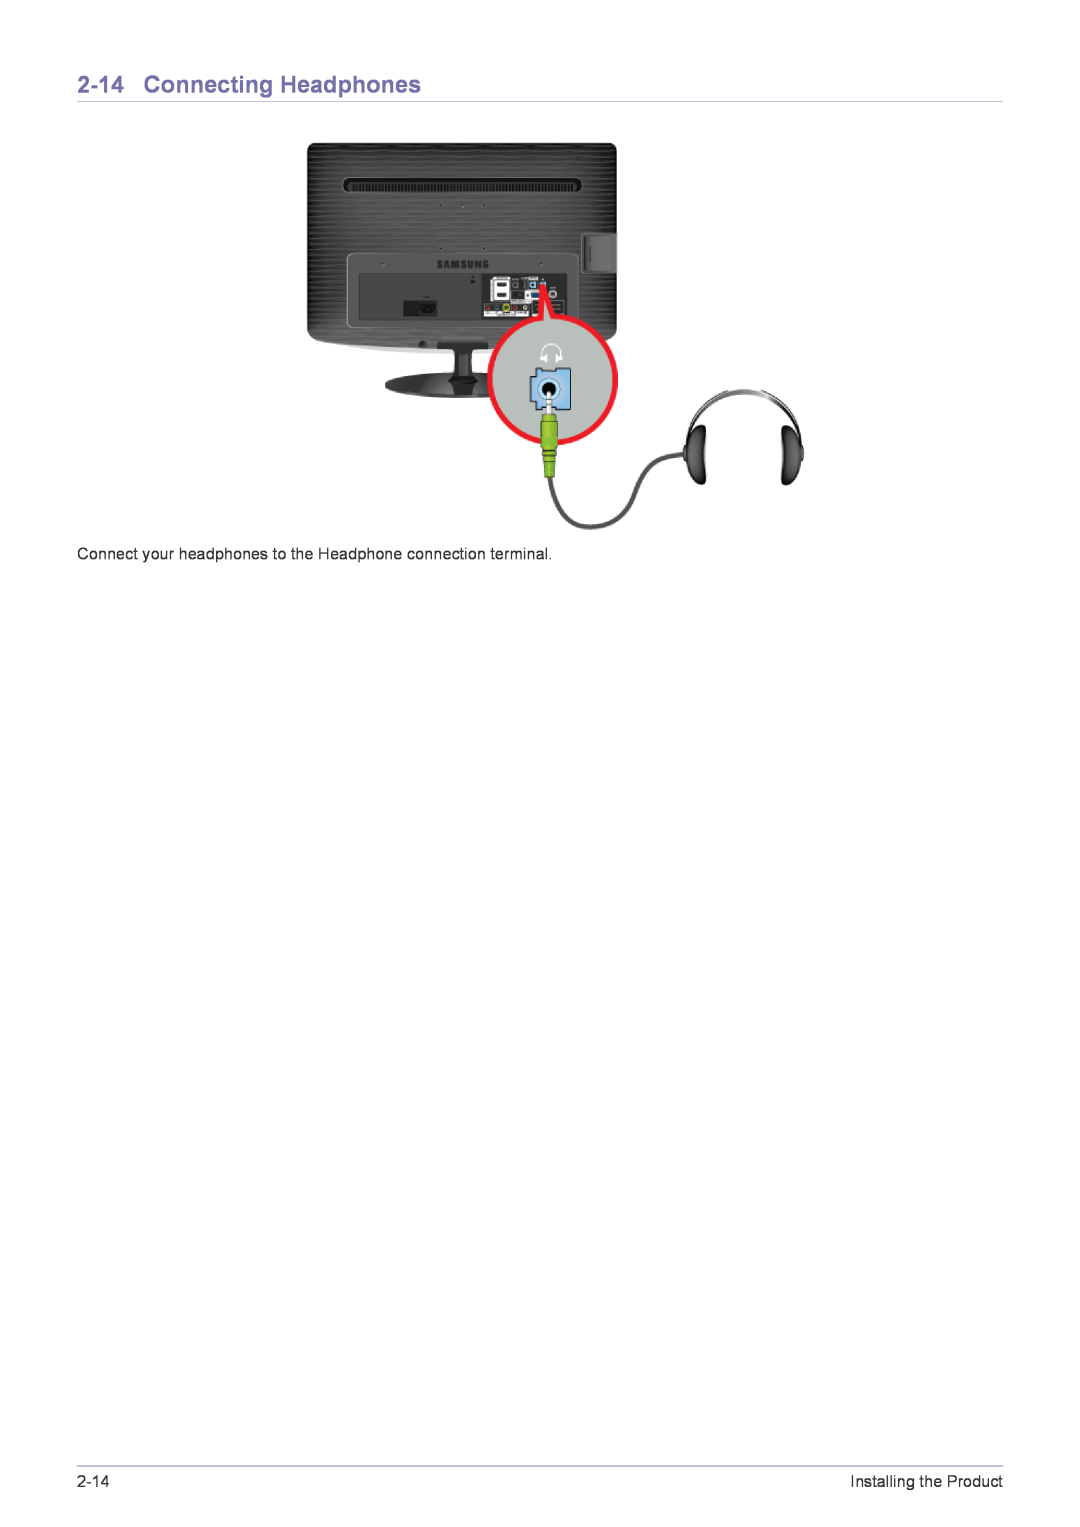 Samsung B2030HD, B2330HD, B2430HD Connecting Headphones, Connect your headphones to the Headphone connection terminal 